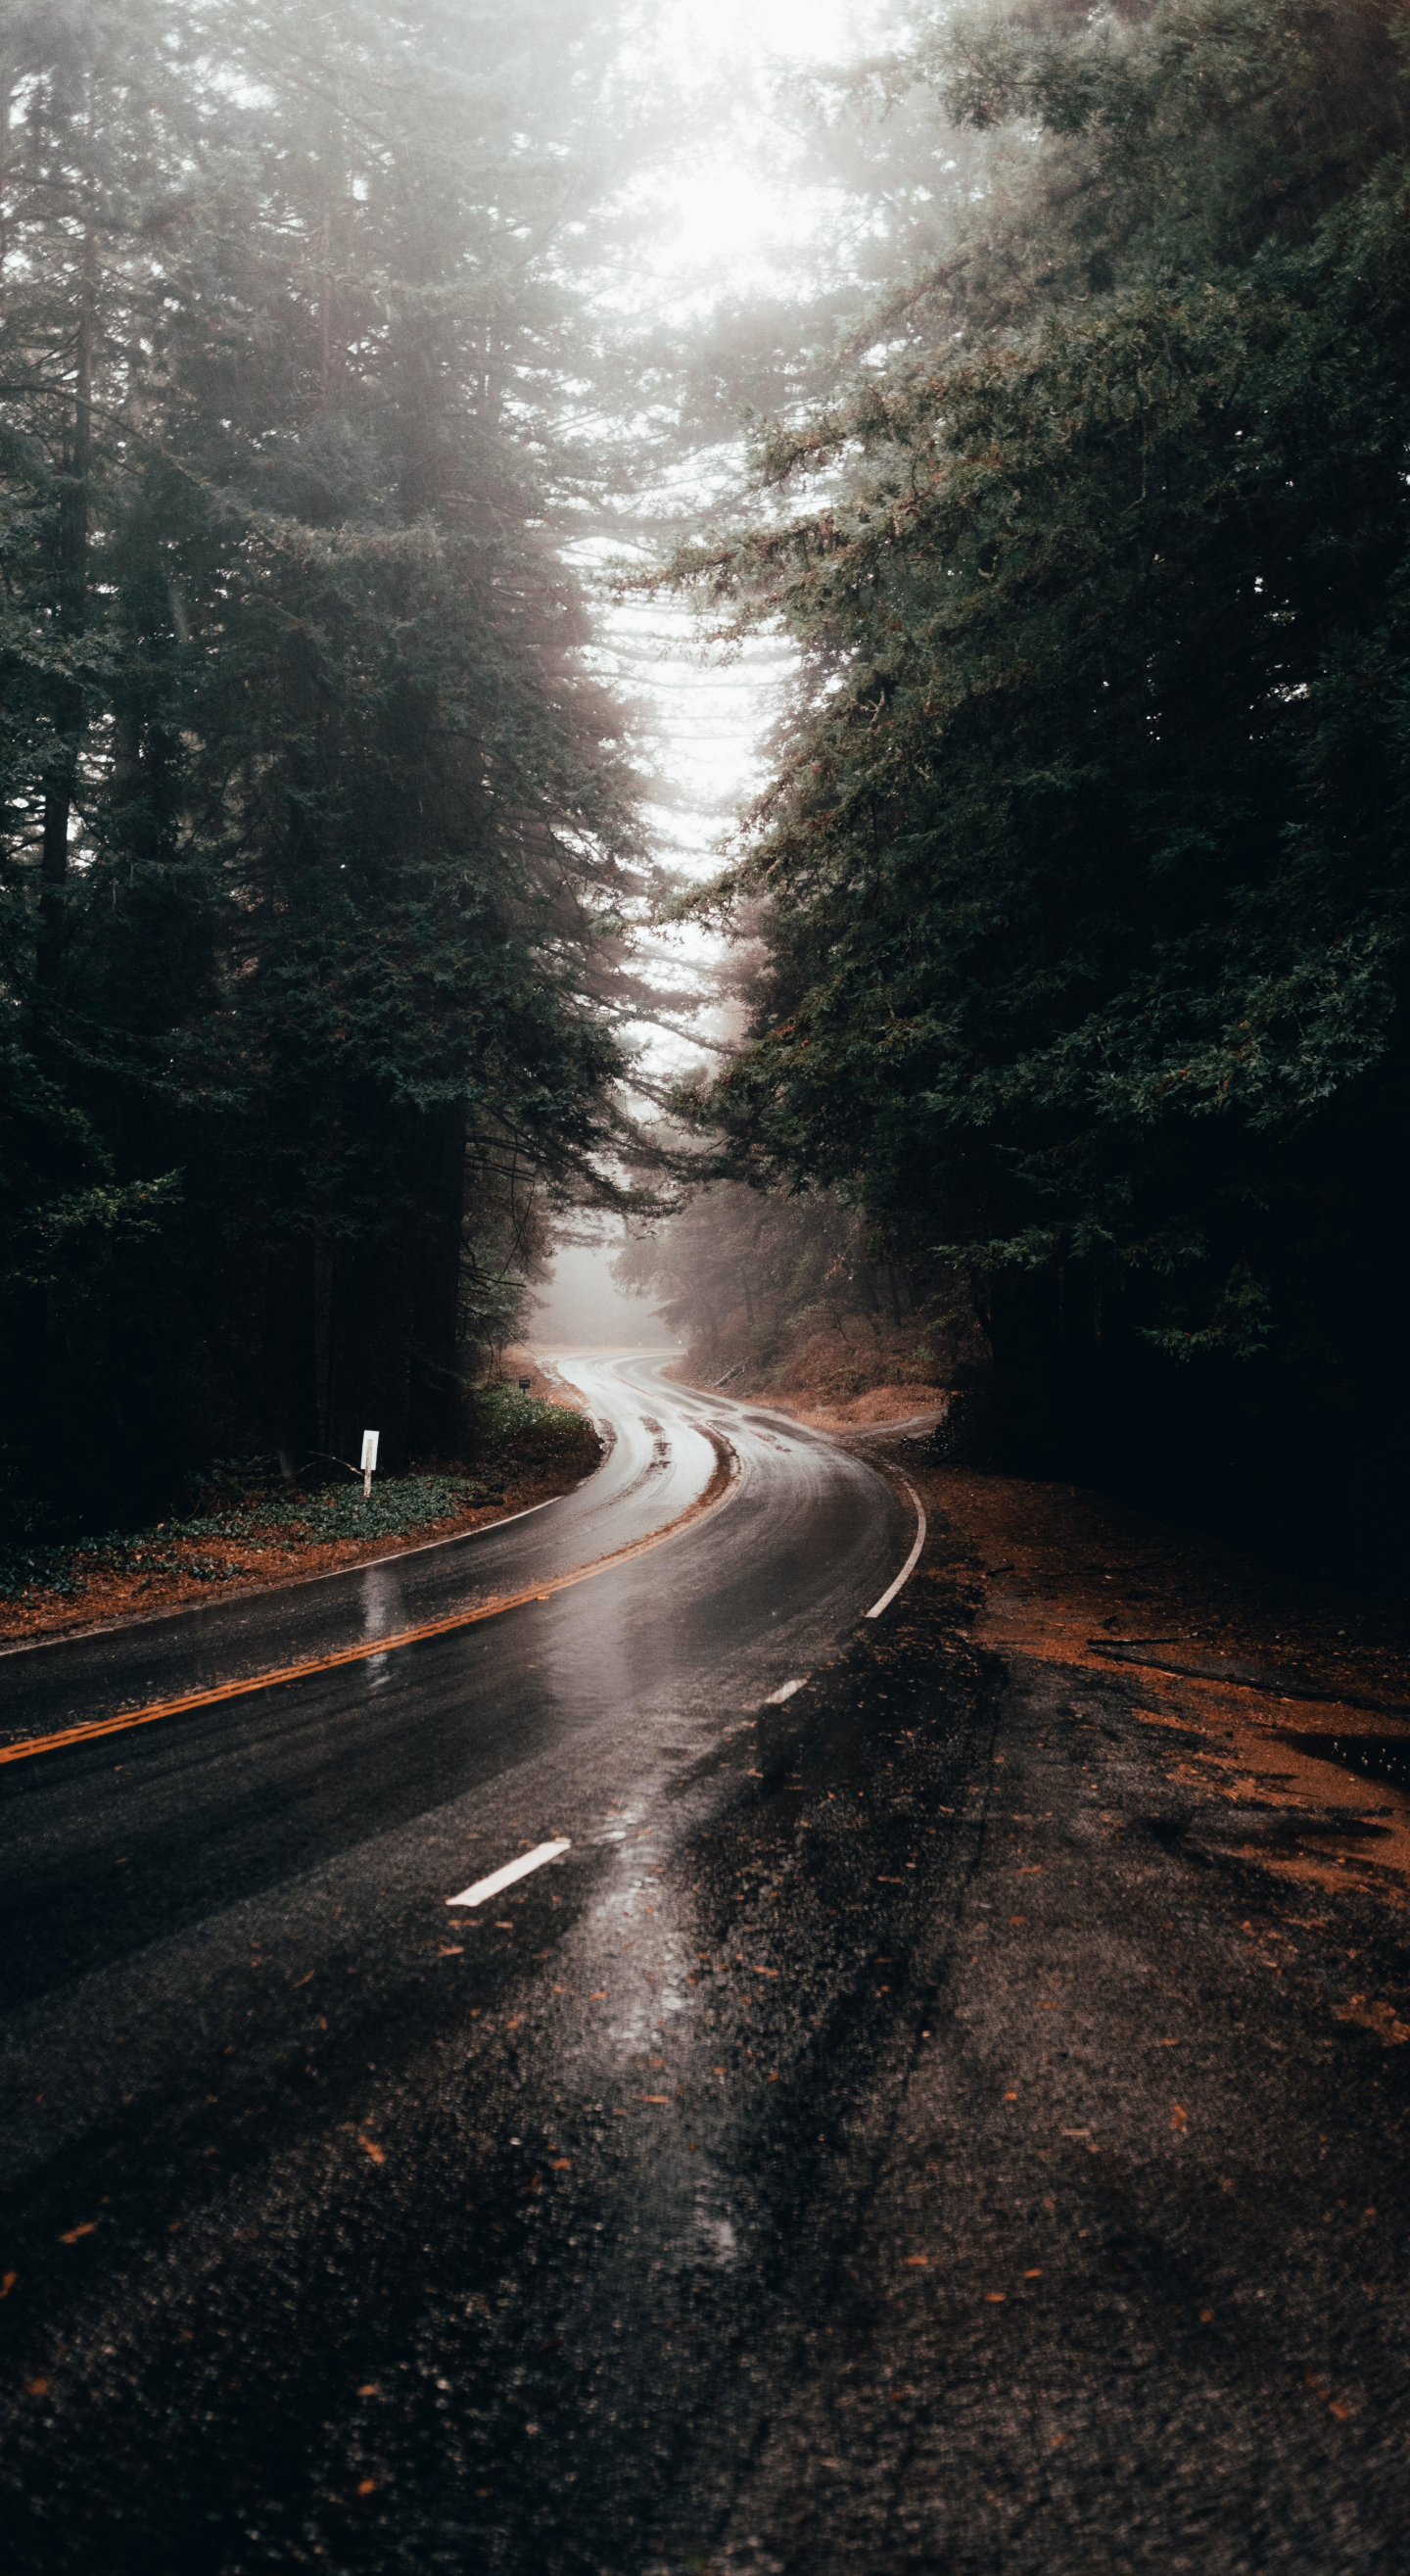 Highway turn, road, rainy, water on road, 1440x2630 wallpaper